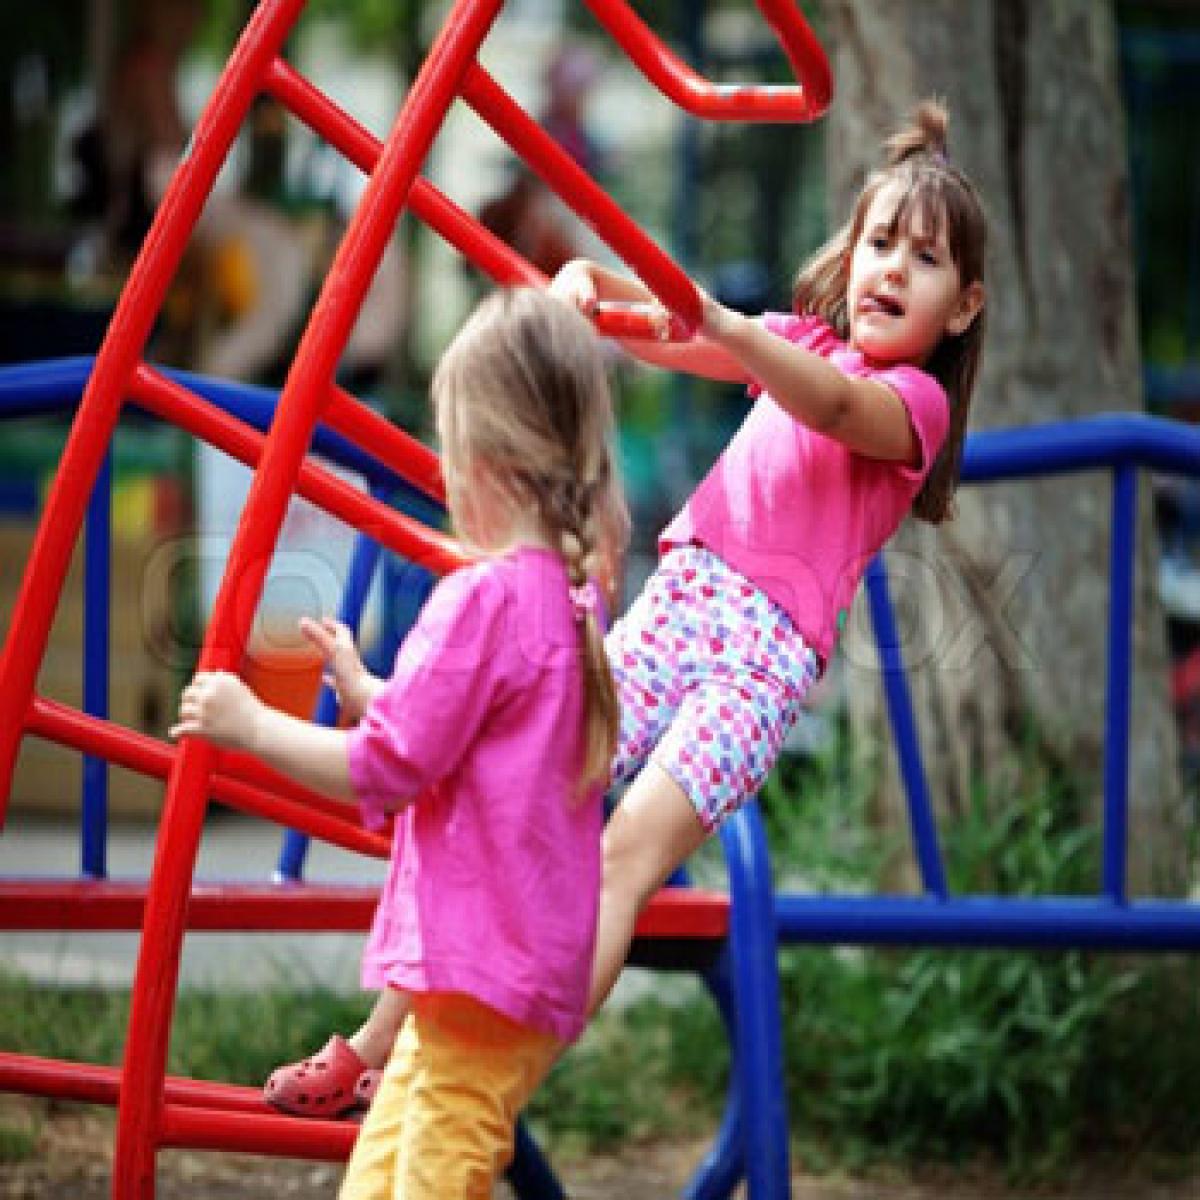 Paint on playground equipment poses risk for children